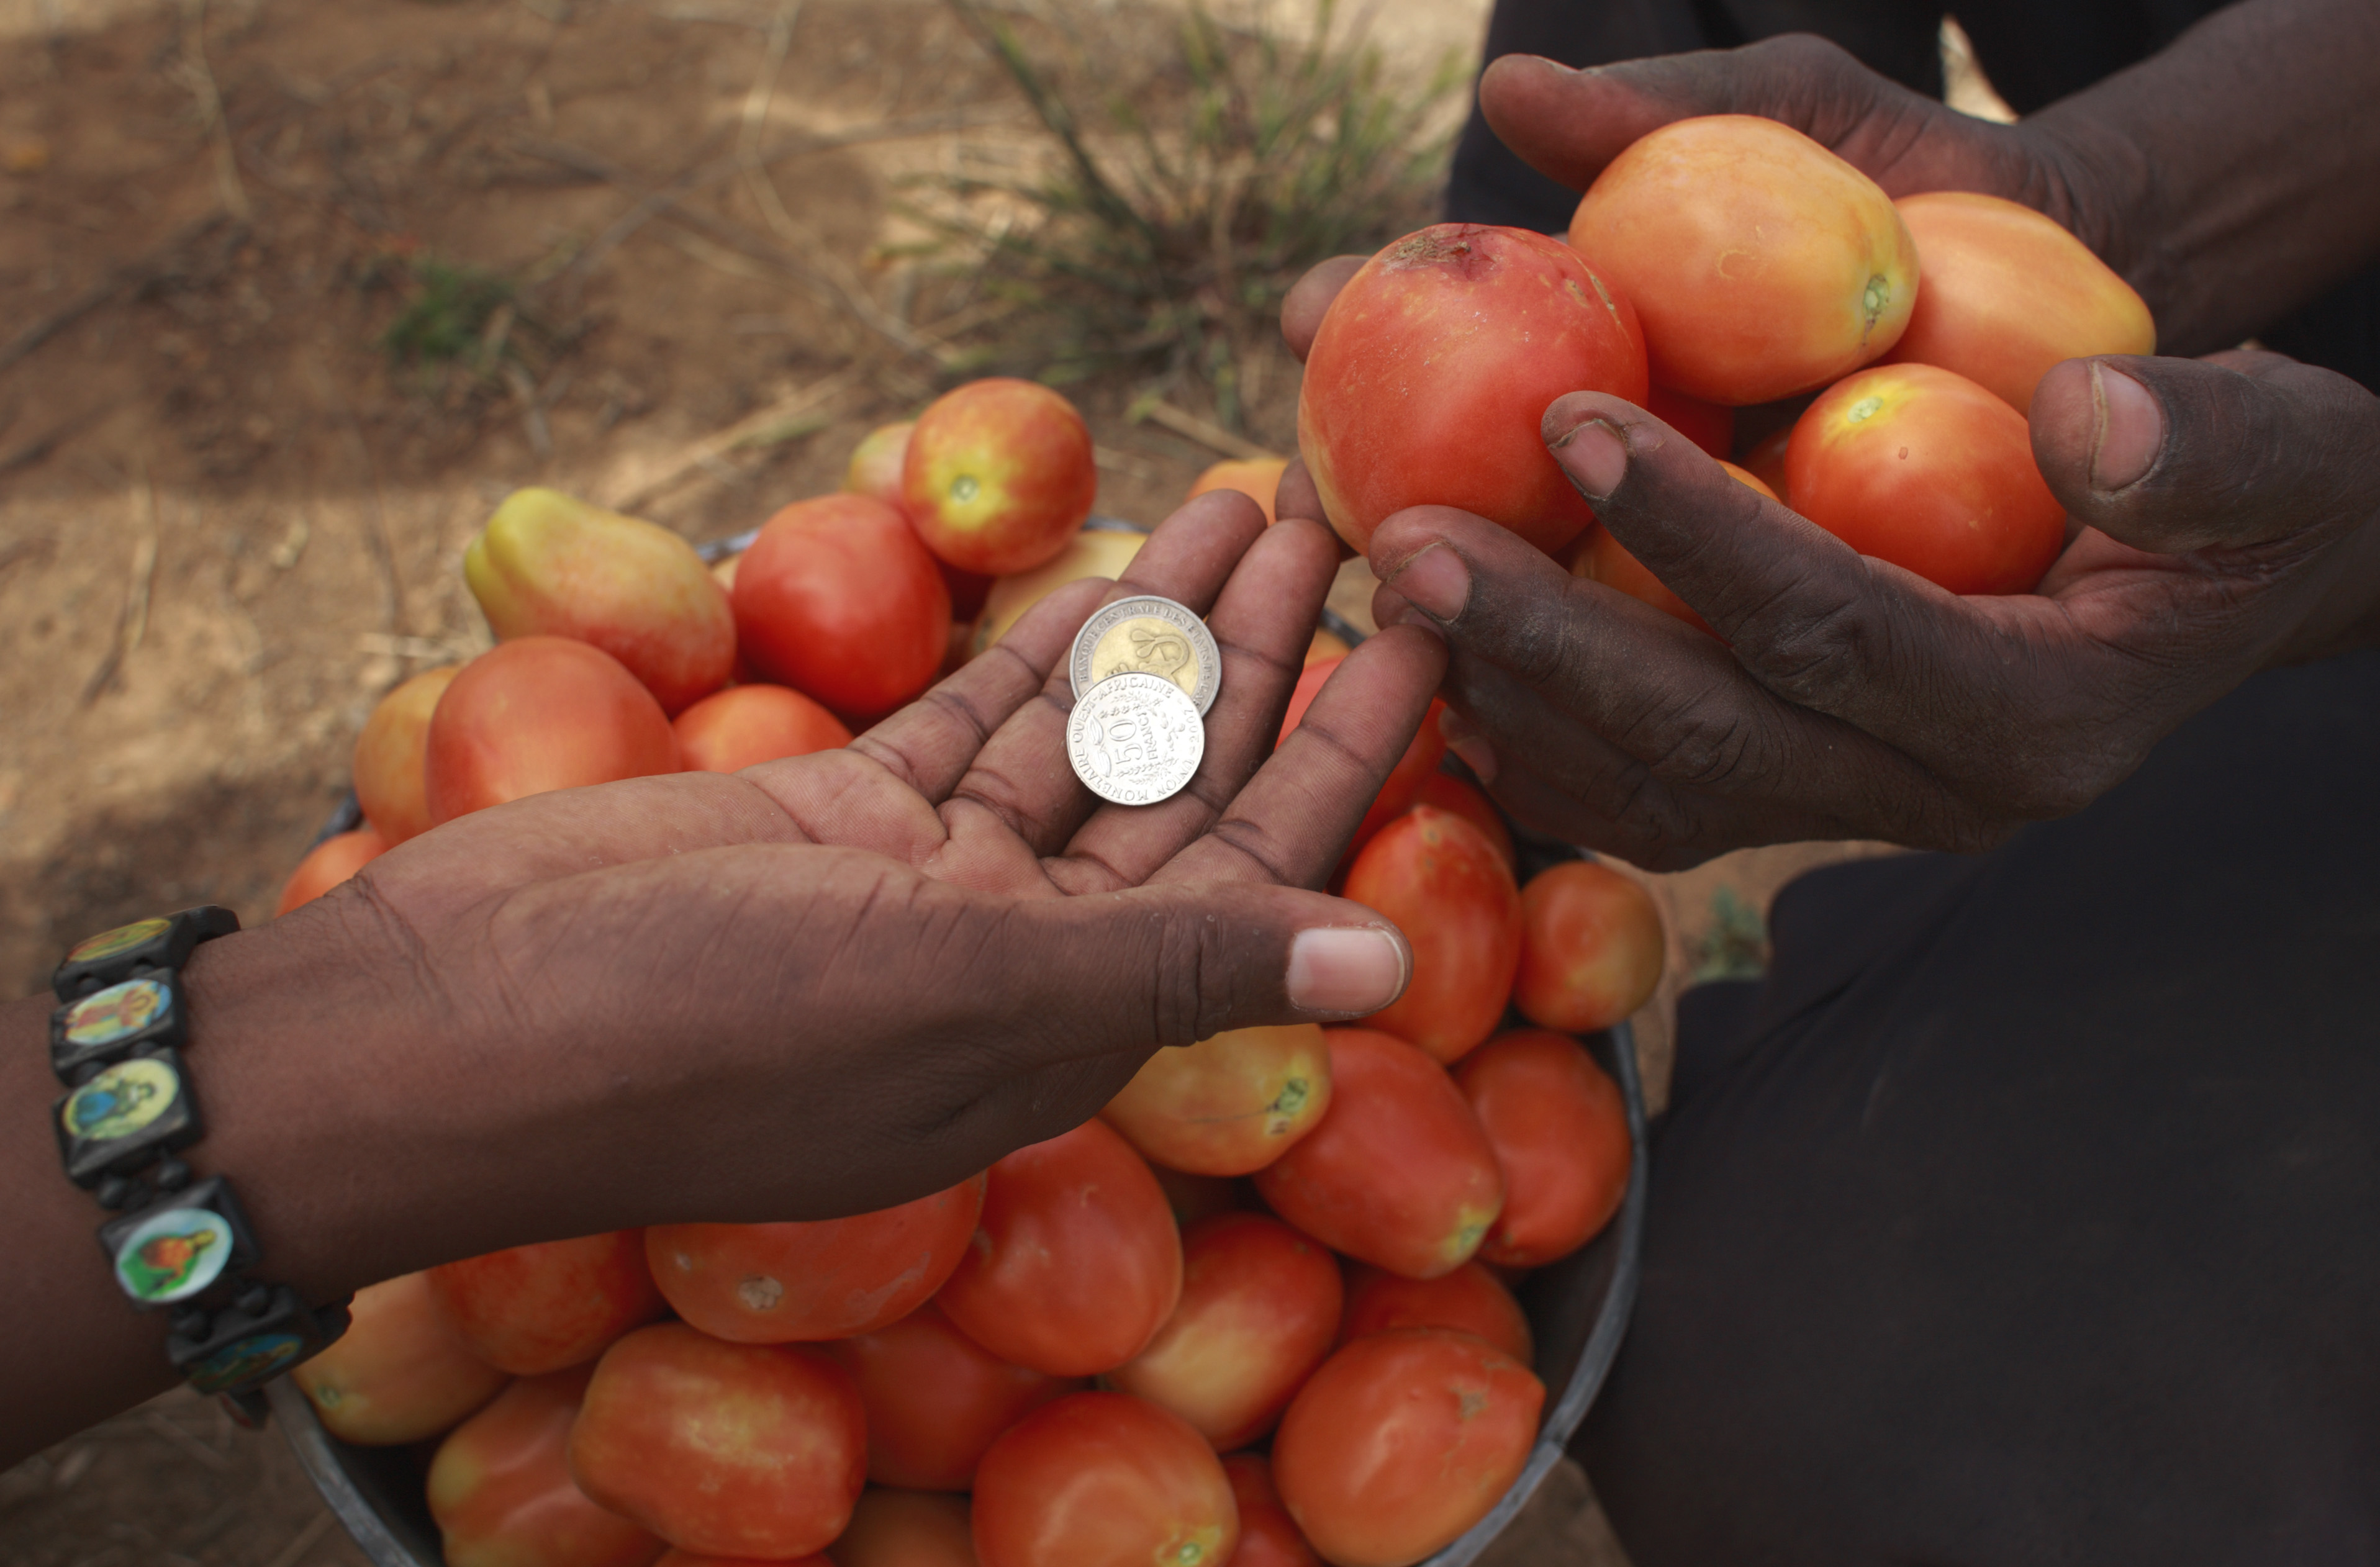 Market scene in Burkina Faso: sale of tomatoes